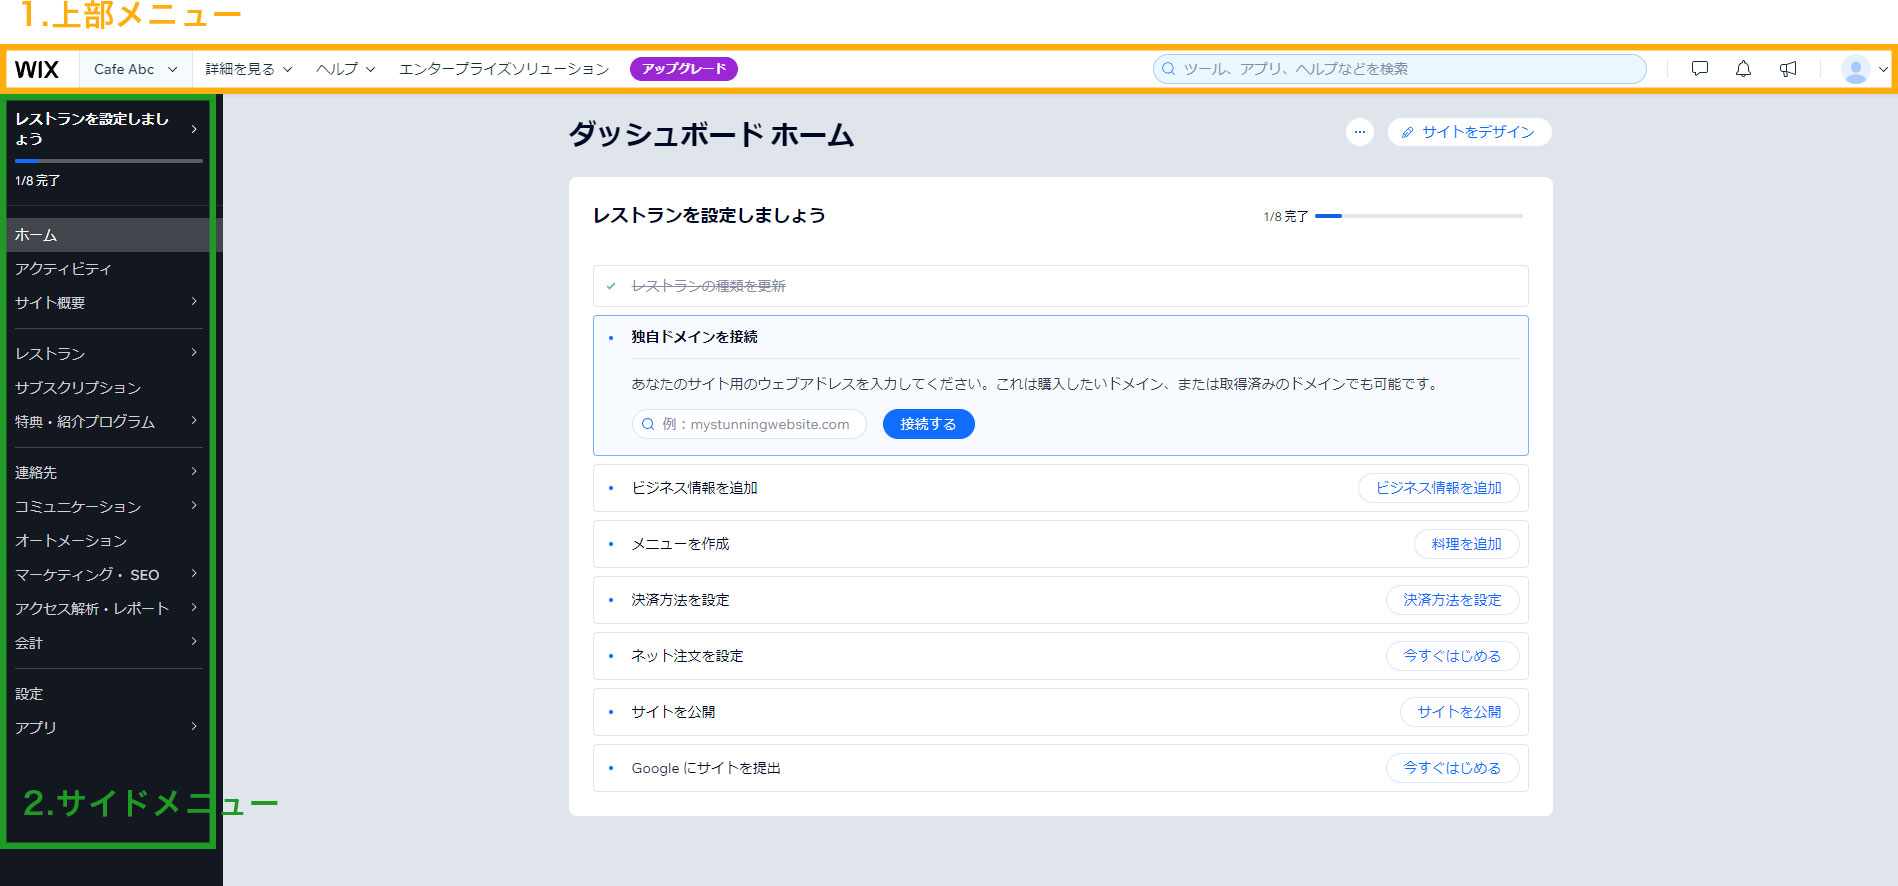 Wix.comのダッシュボード画面